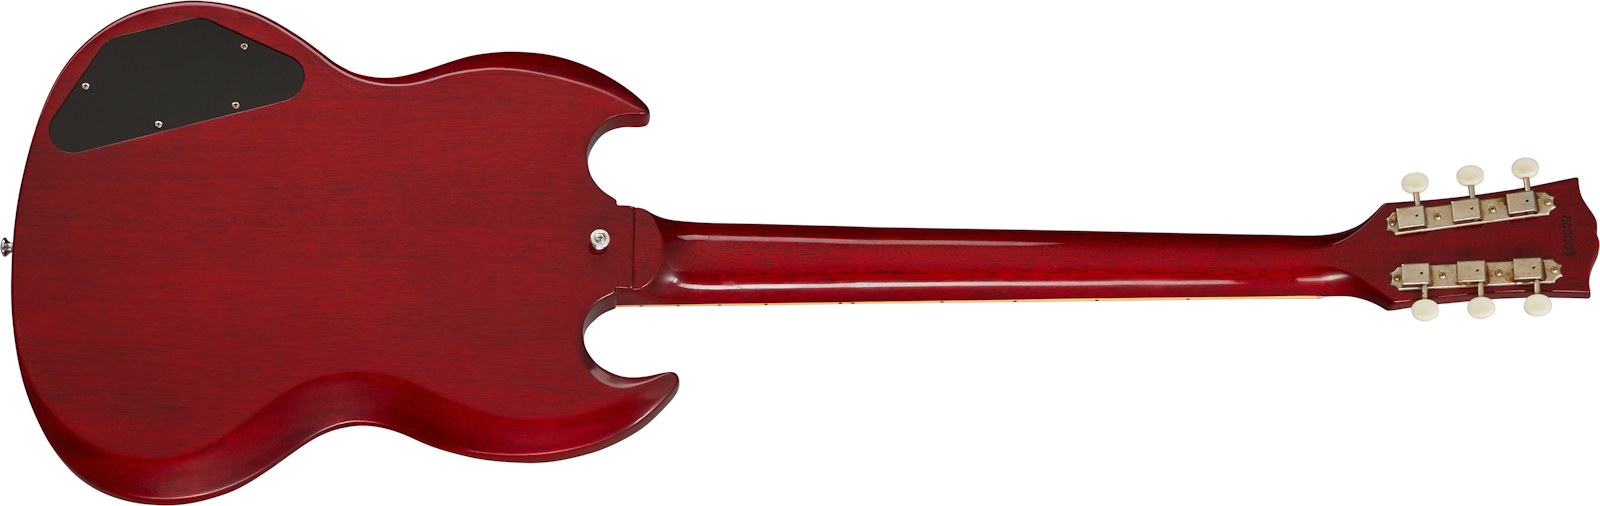 Gibson Custom Shop Sg Special 1963 Reissue 2p90 Ht Rw - Vos Cherry Red - Guitare Électrique Double Cut - Variation 1